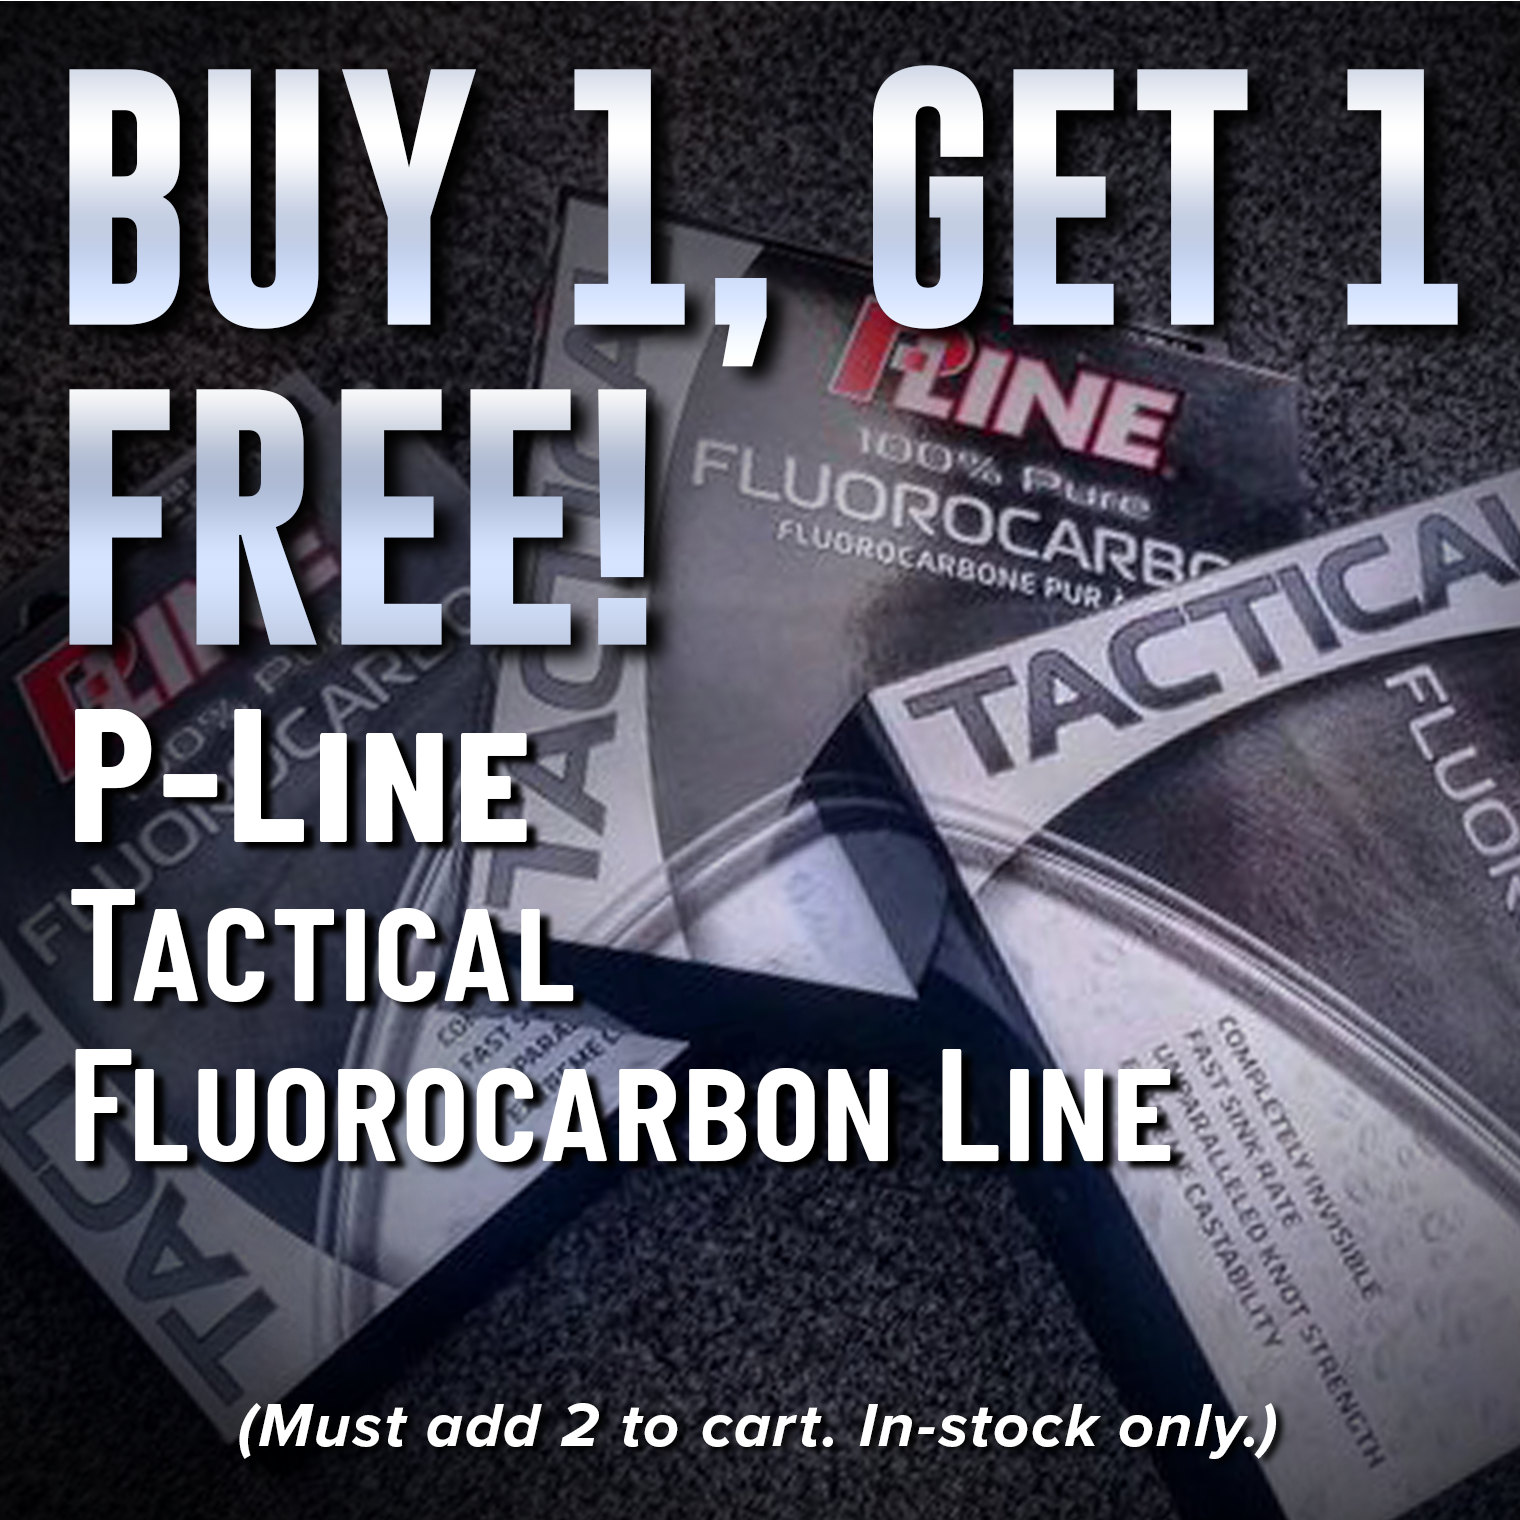 Buy 1, Get 1 Free! P-Line Tactical Fluorocarbon Line